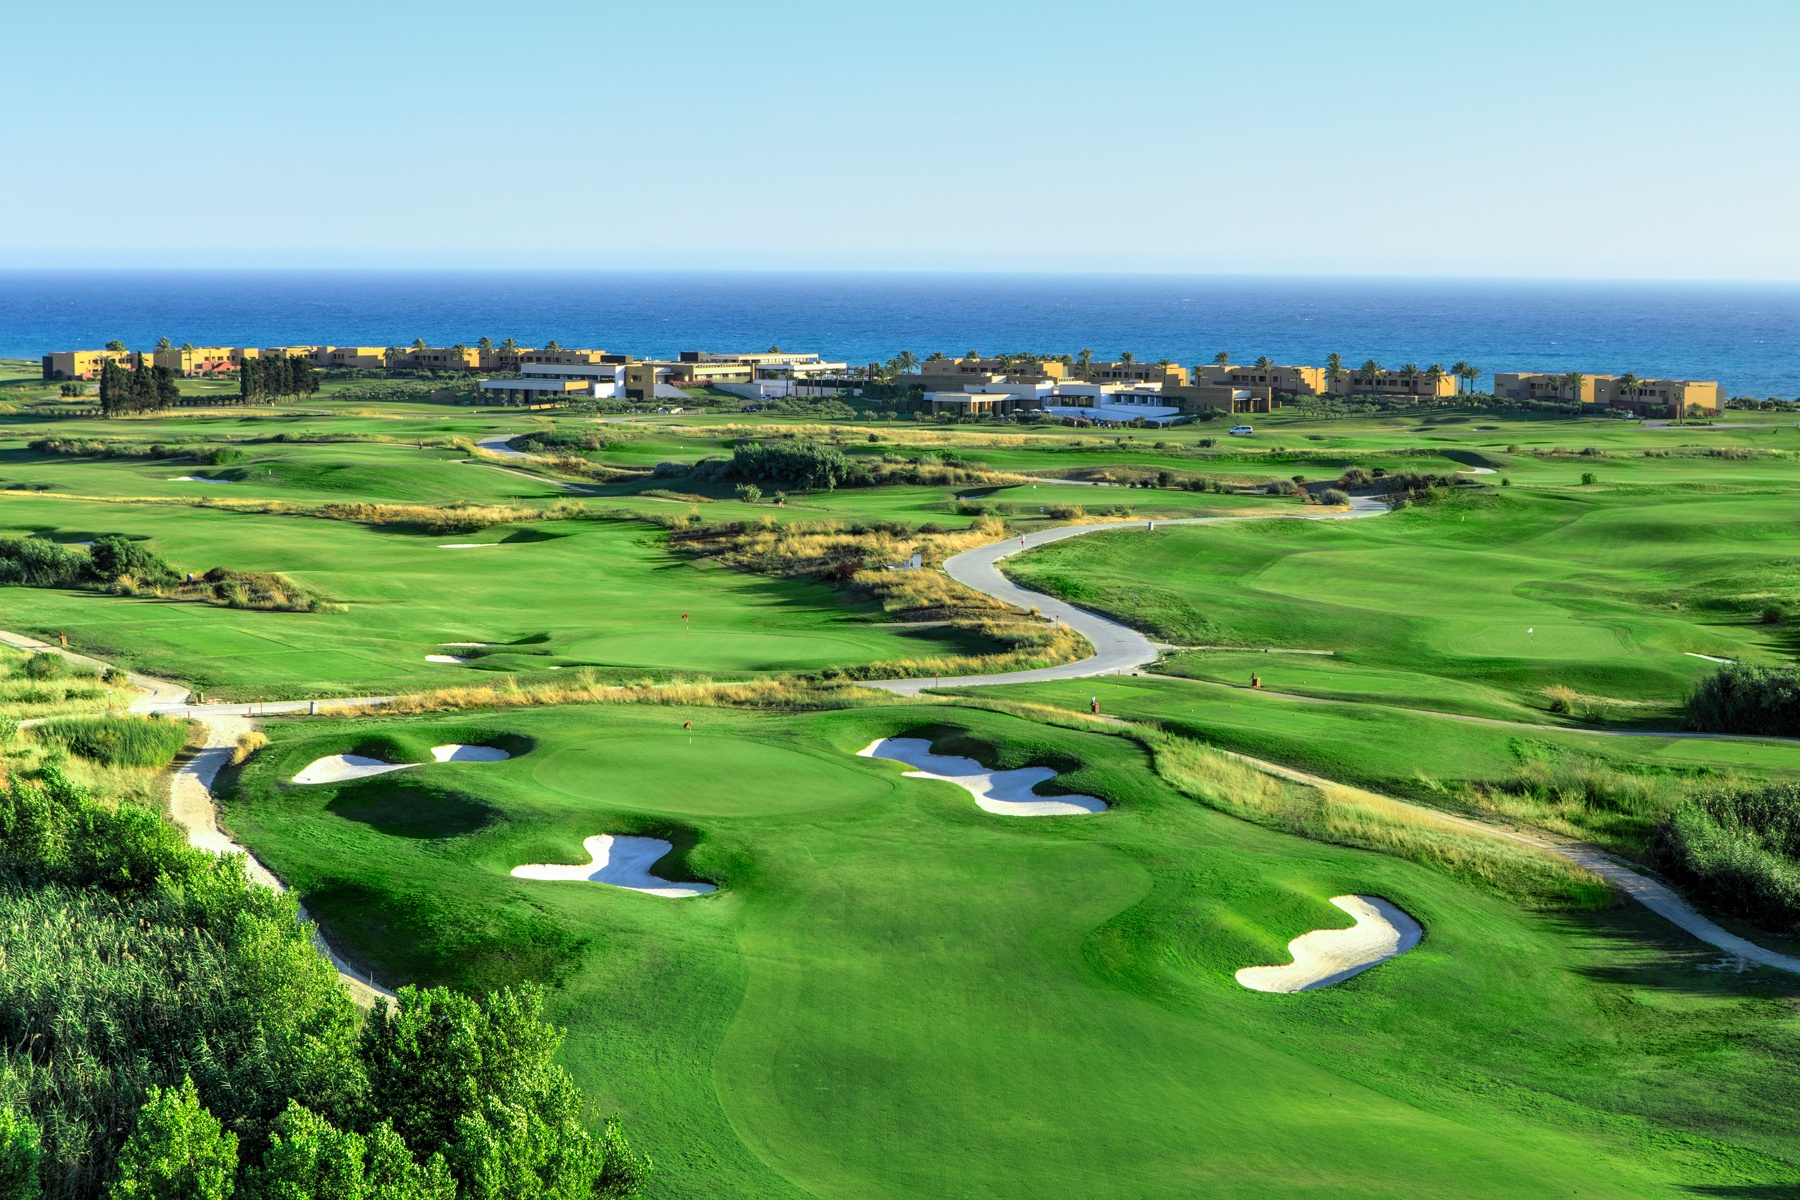 Verdura Resort and golf course